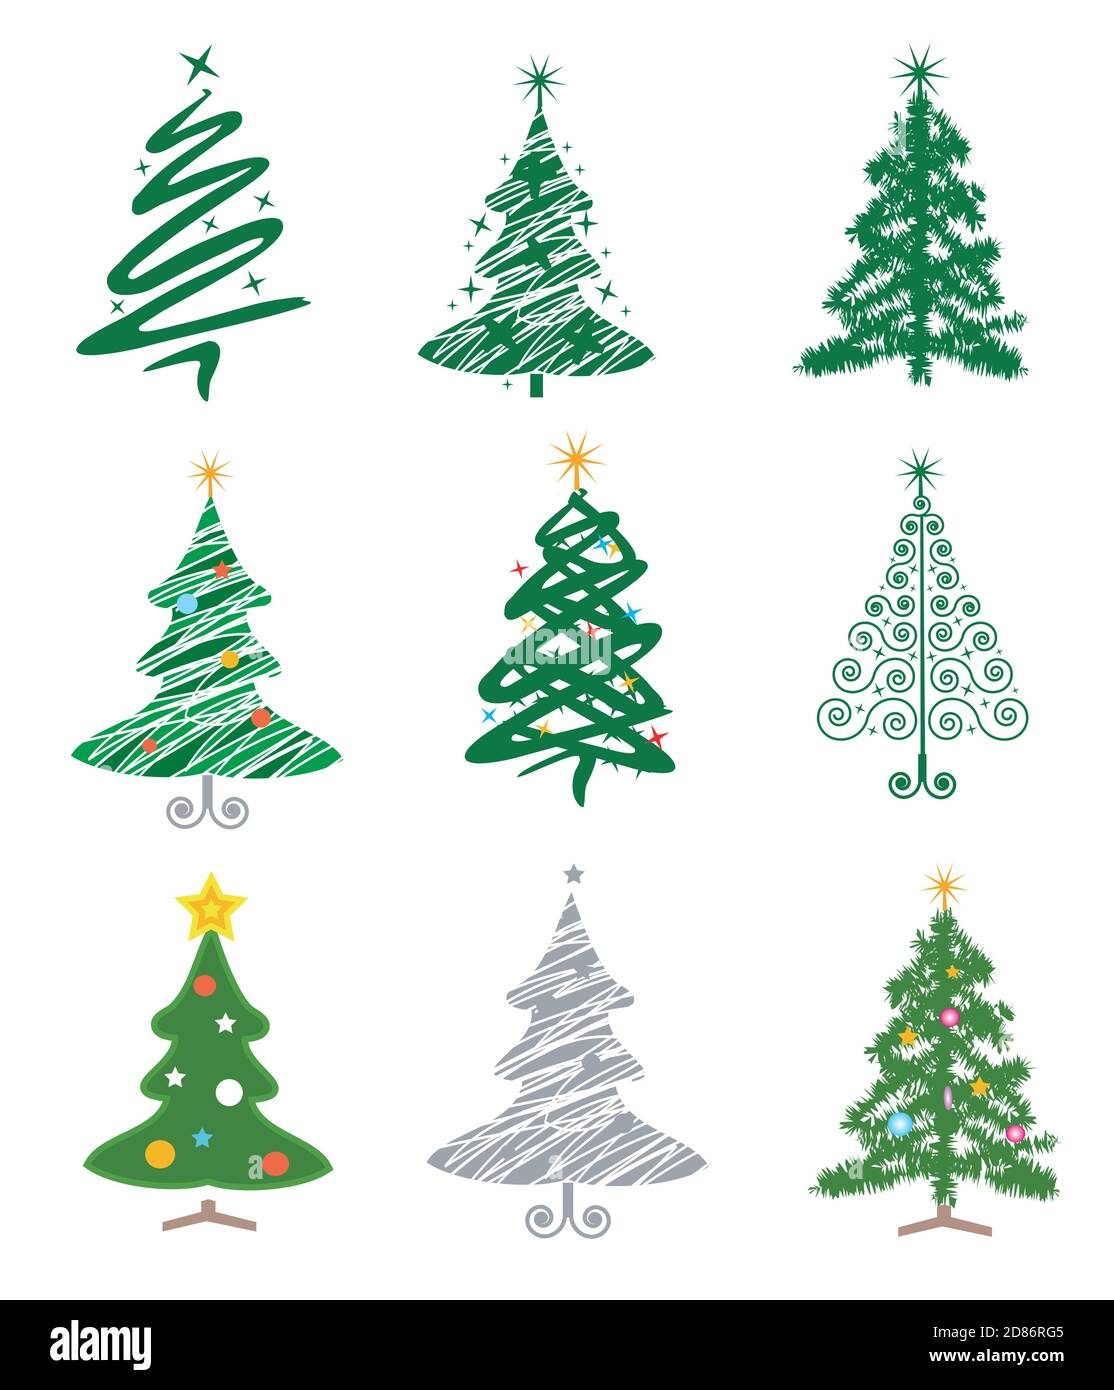 Weihnachtsbäume. Set von neun stilisierten weihnachtsbäumen.Vektor verfügbar. Stock Vektor